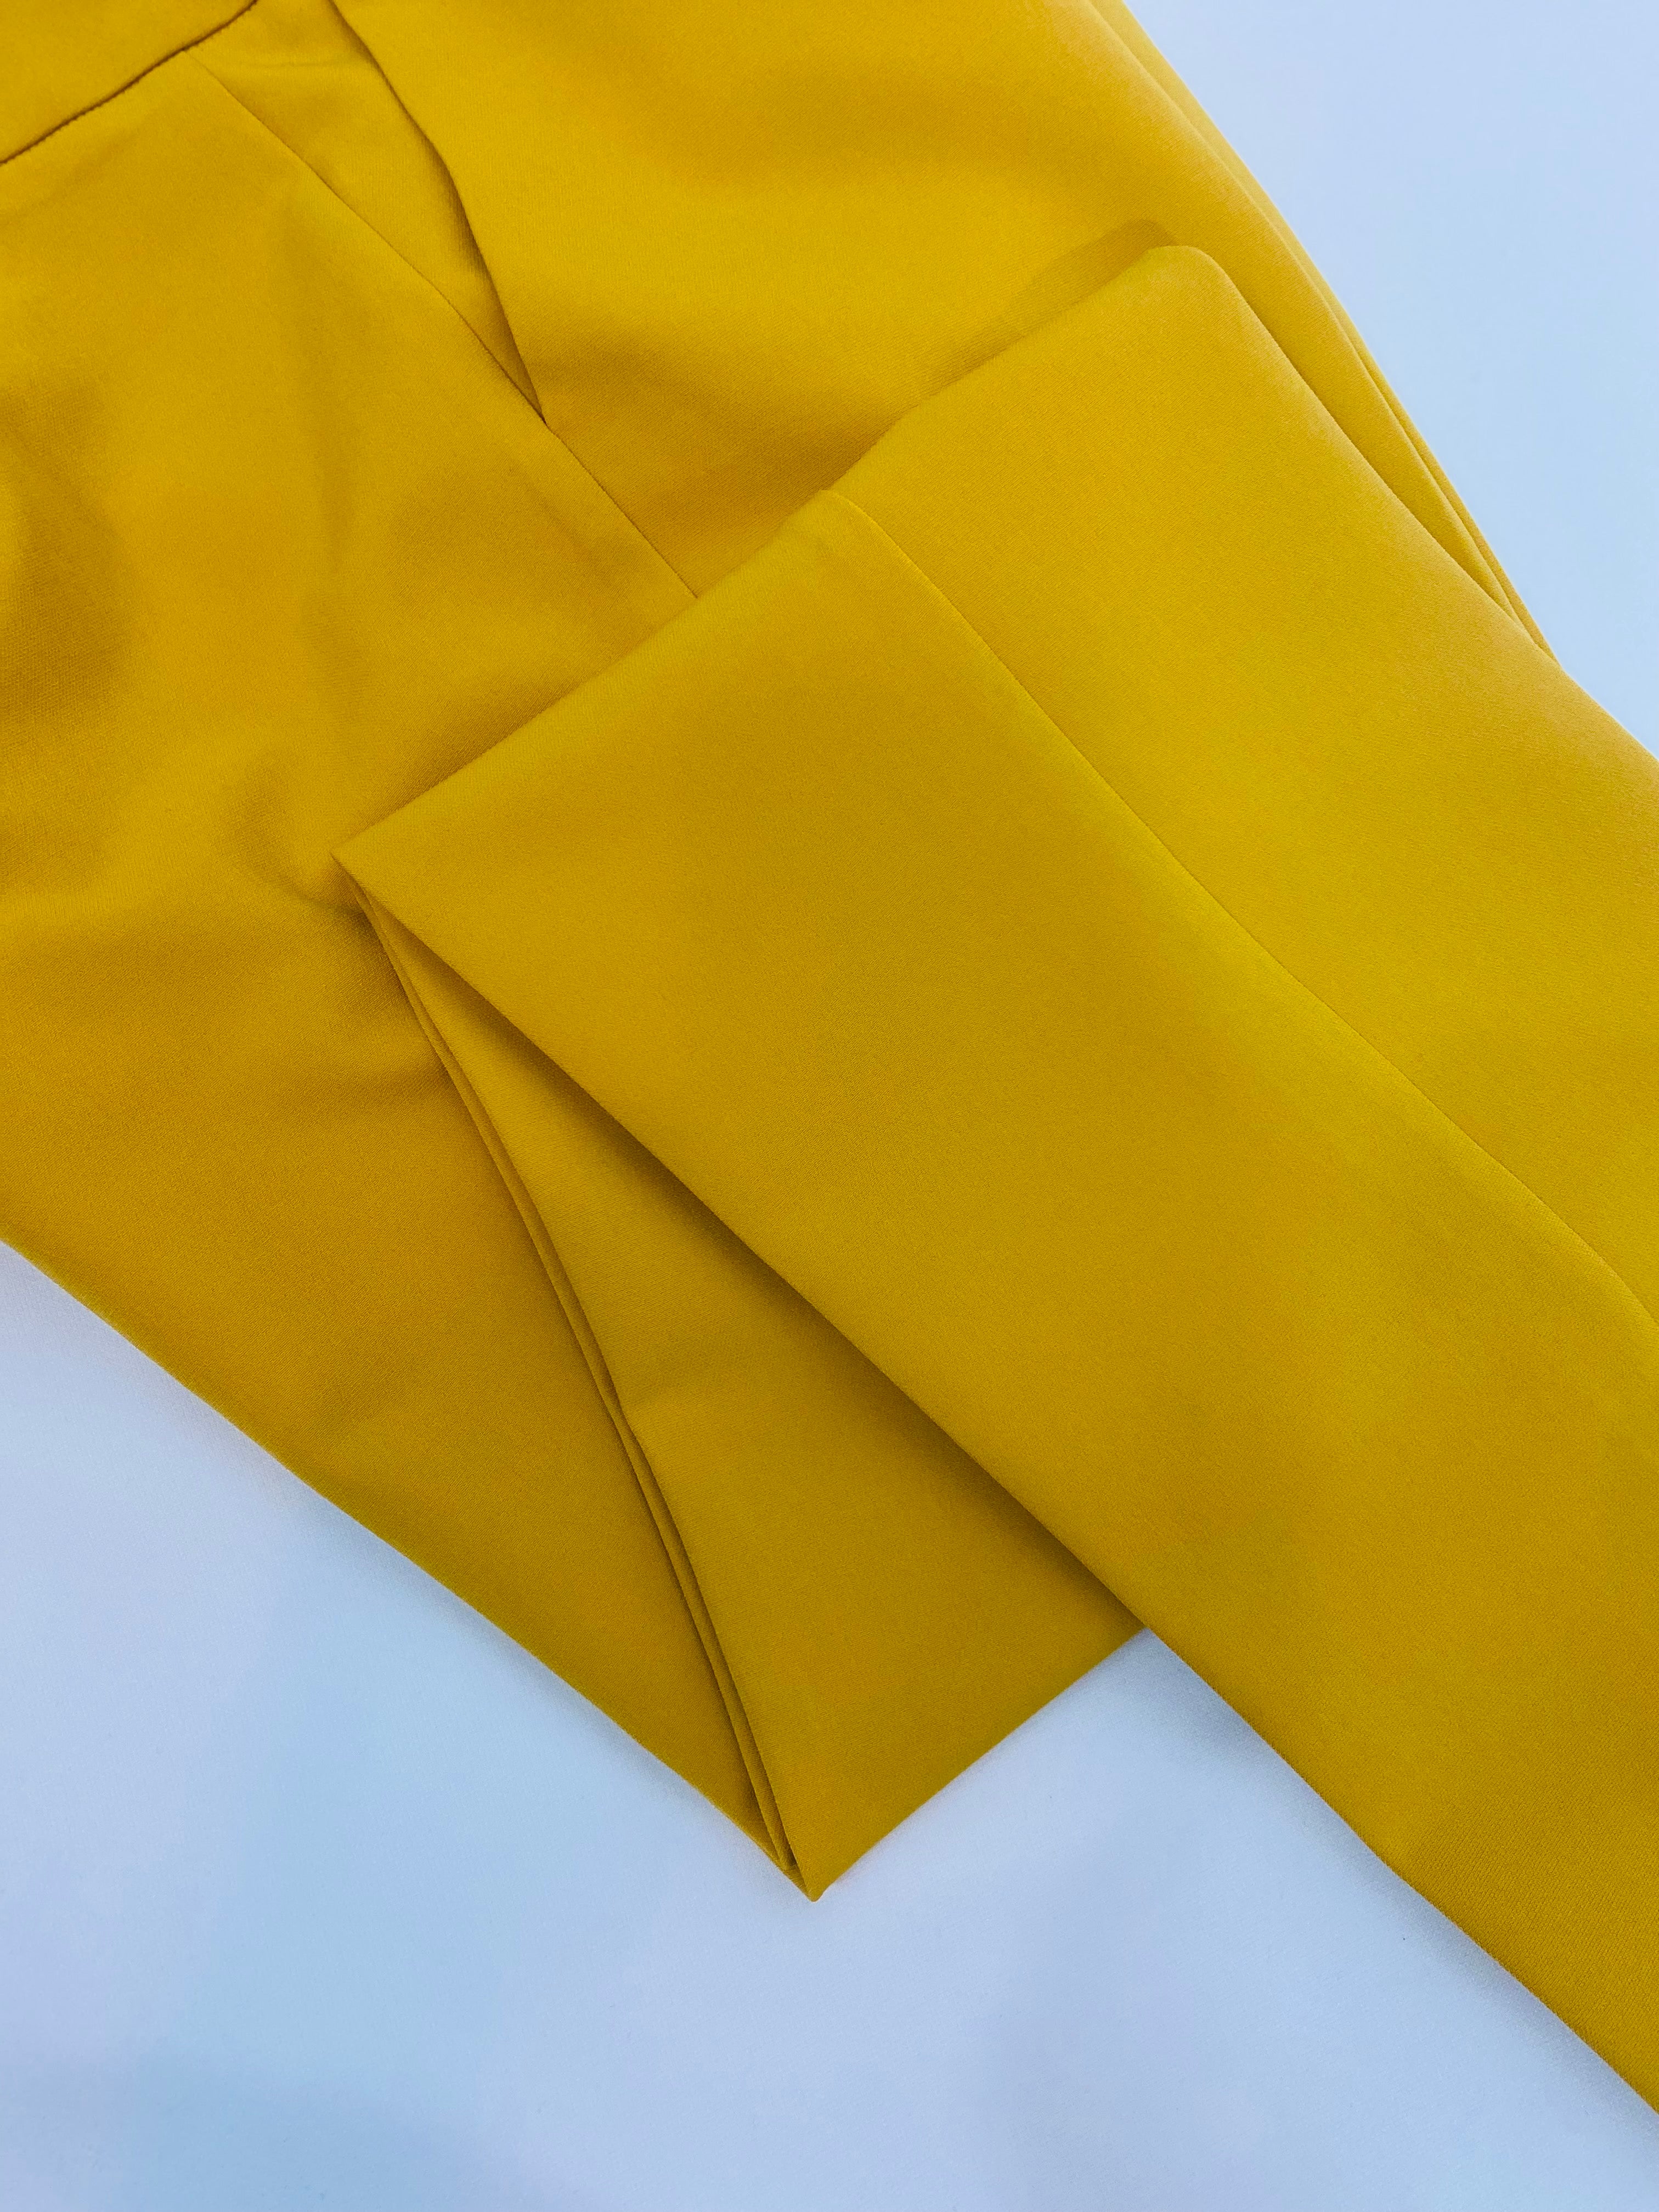 Mustard Yellow Women's Blazer Suit - Safistakitz Boutique